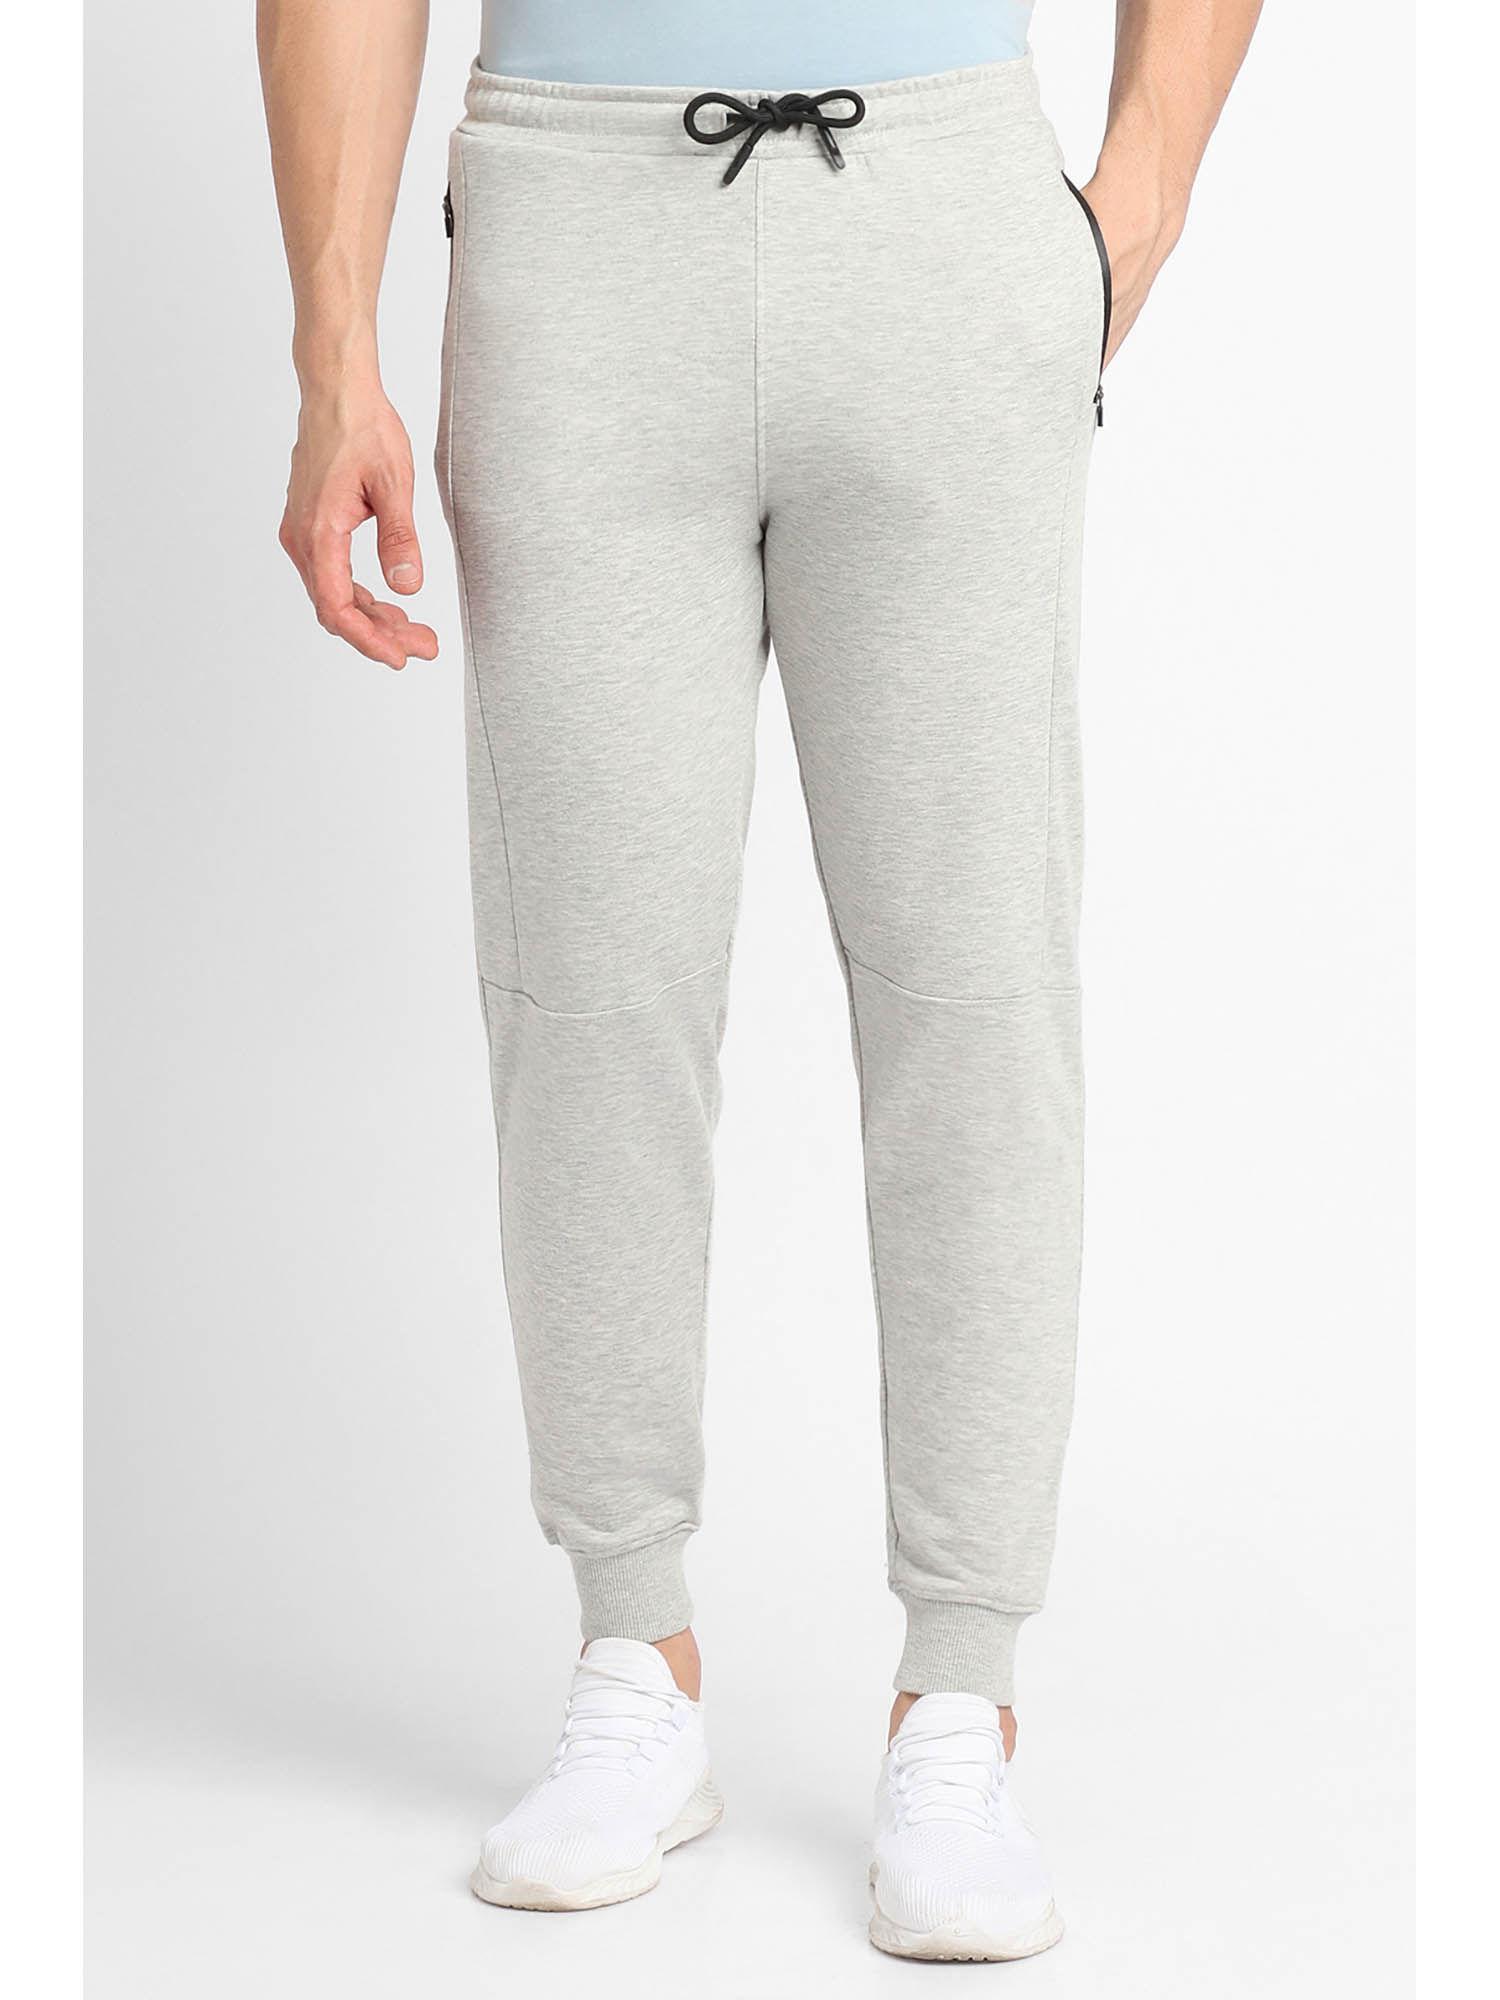 solid-grey-jogger-pants